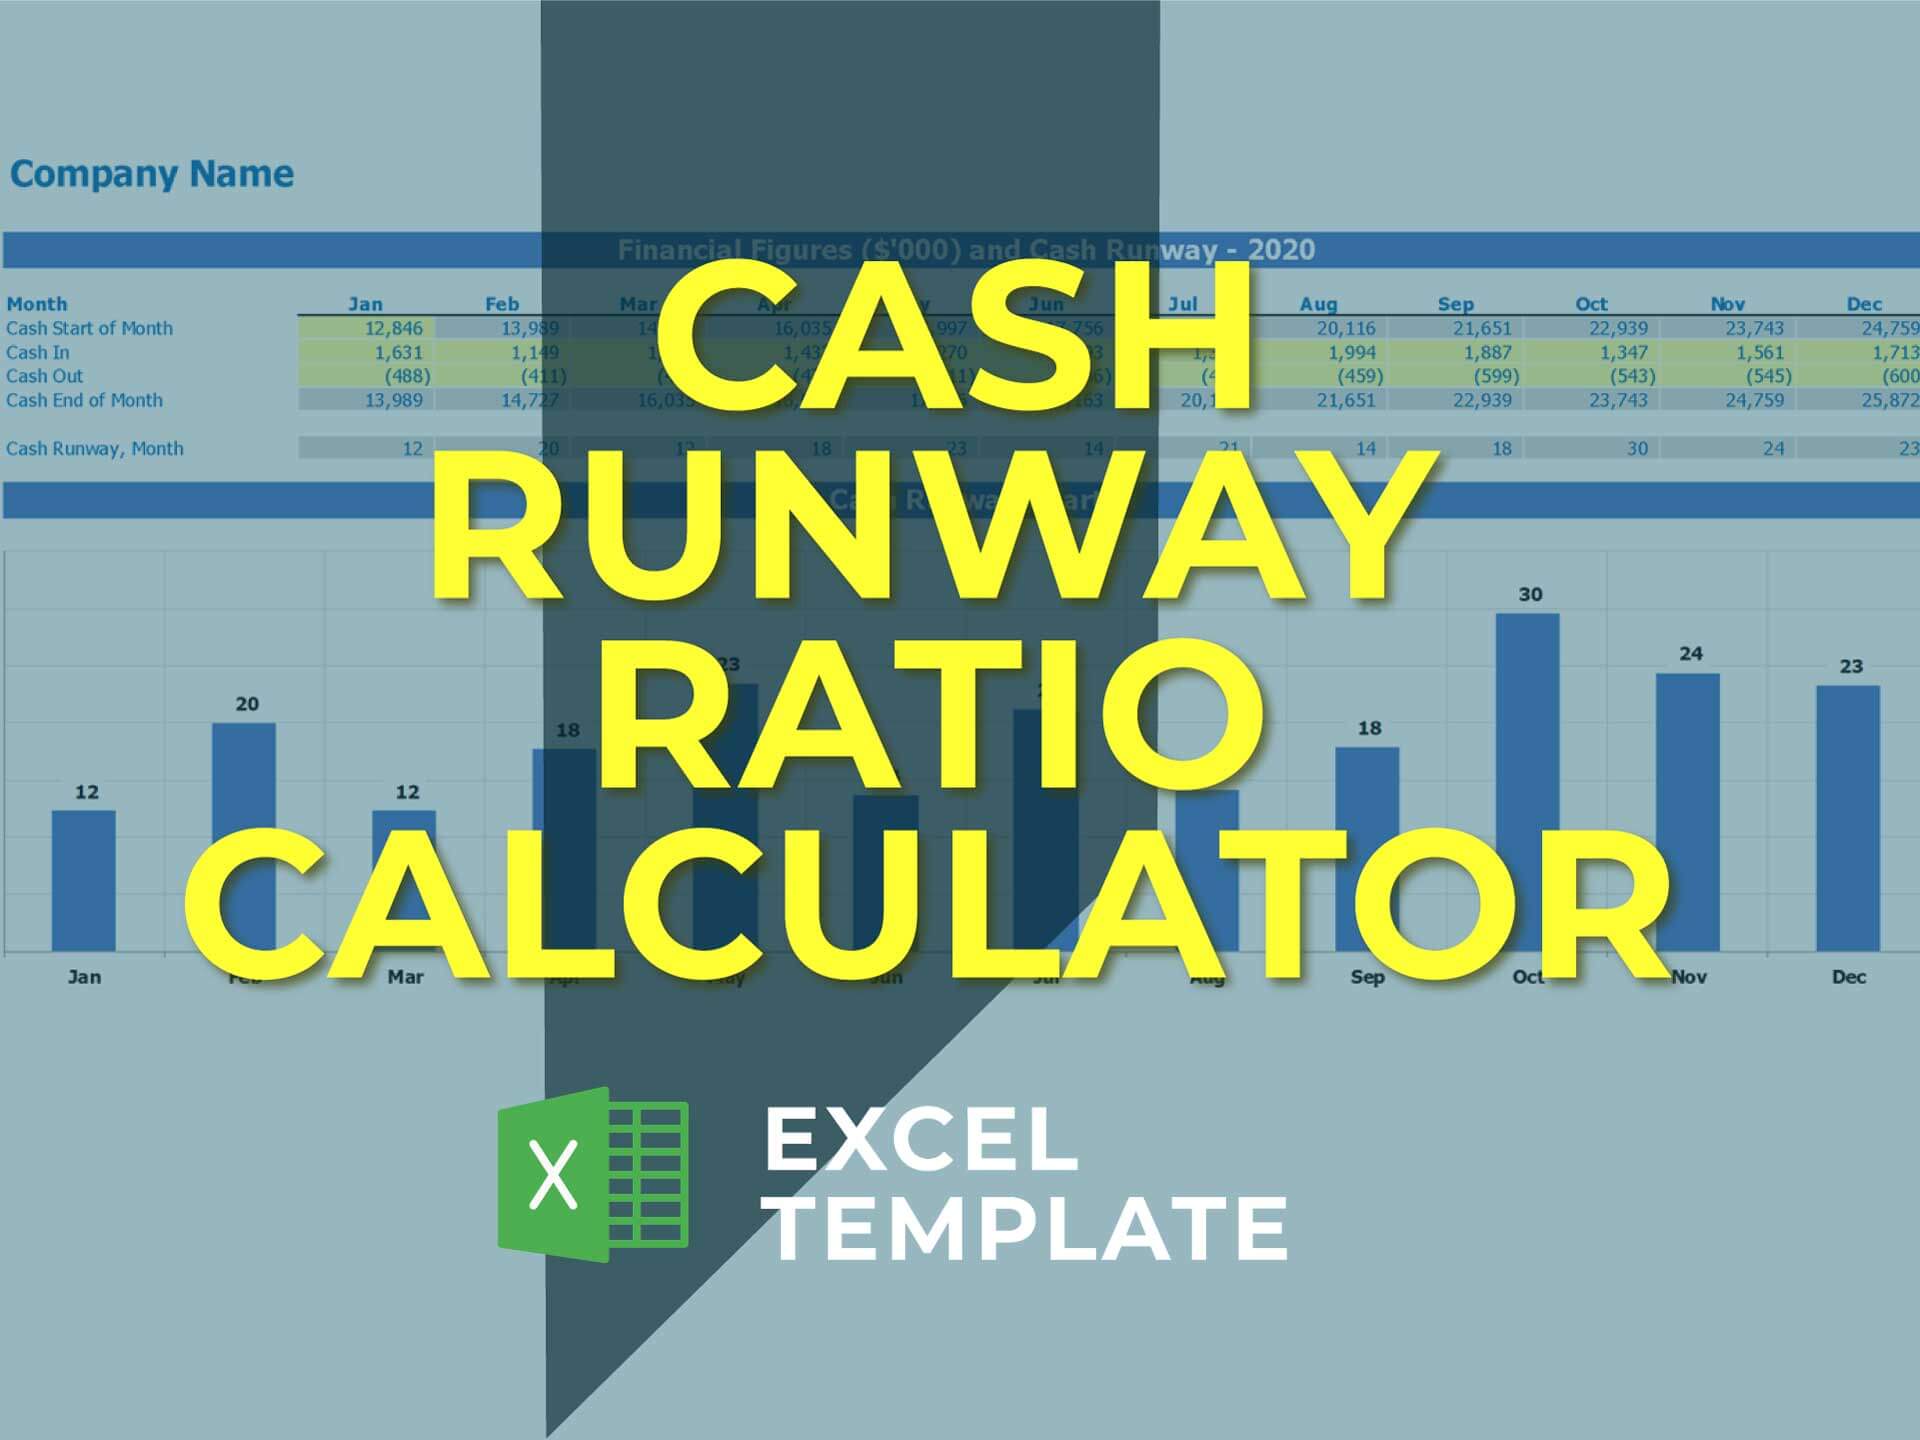 Cash Runway Ratio Calculator